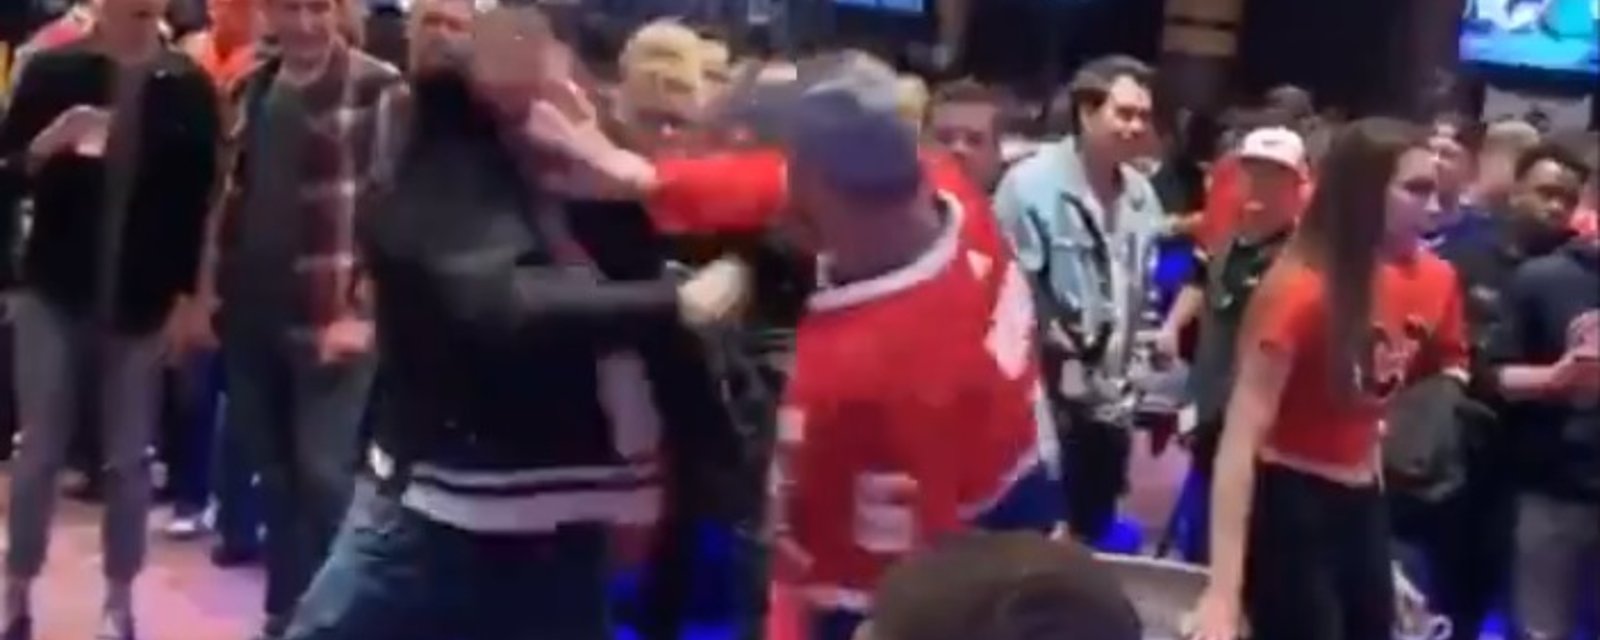 Cameras catch wild brawl between Canadiens fans in Calgary.